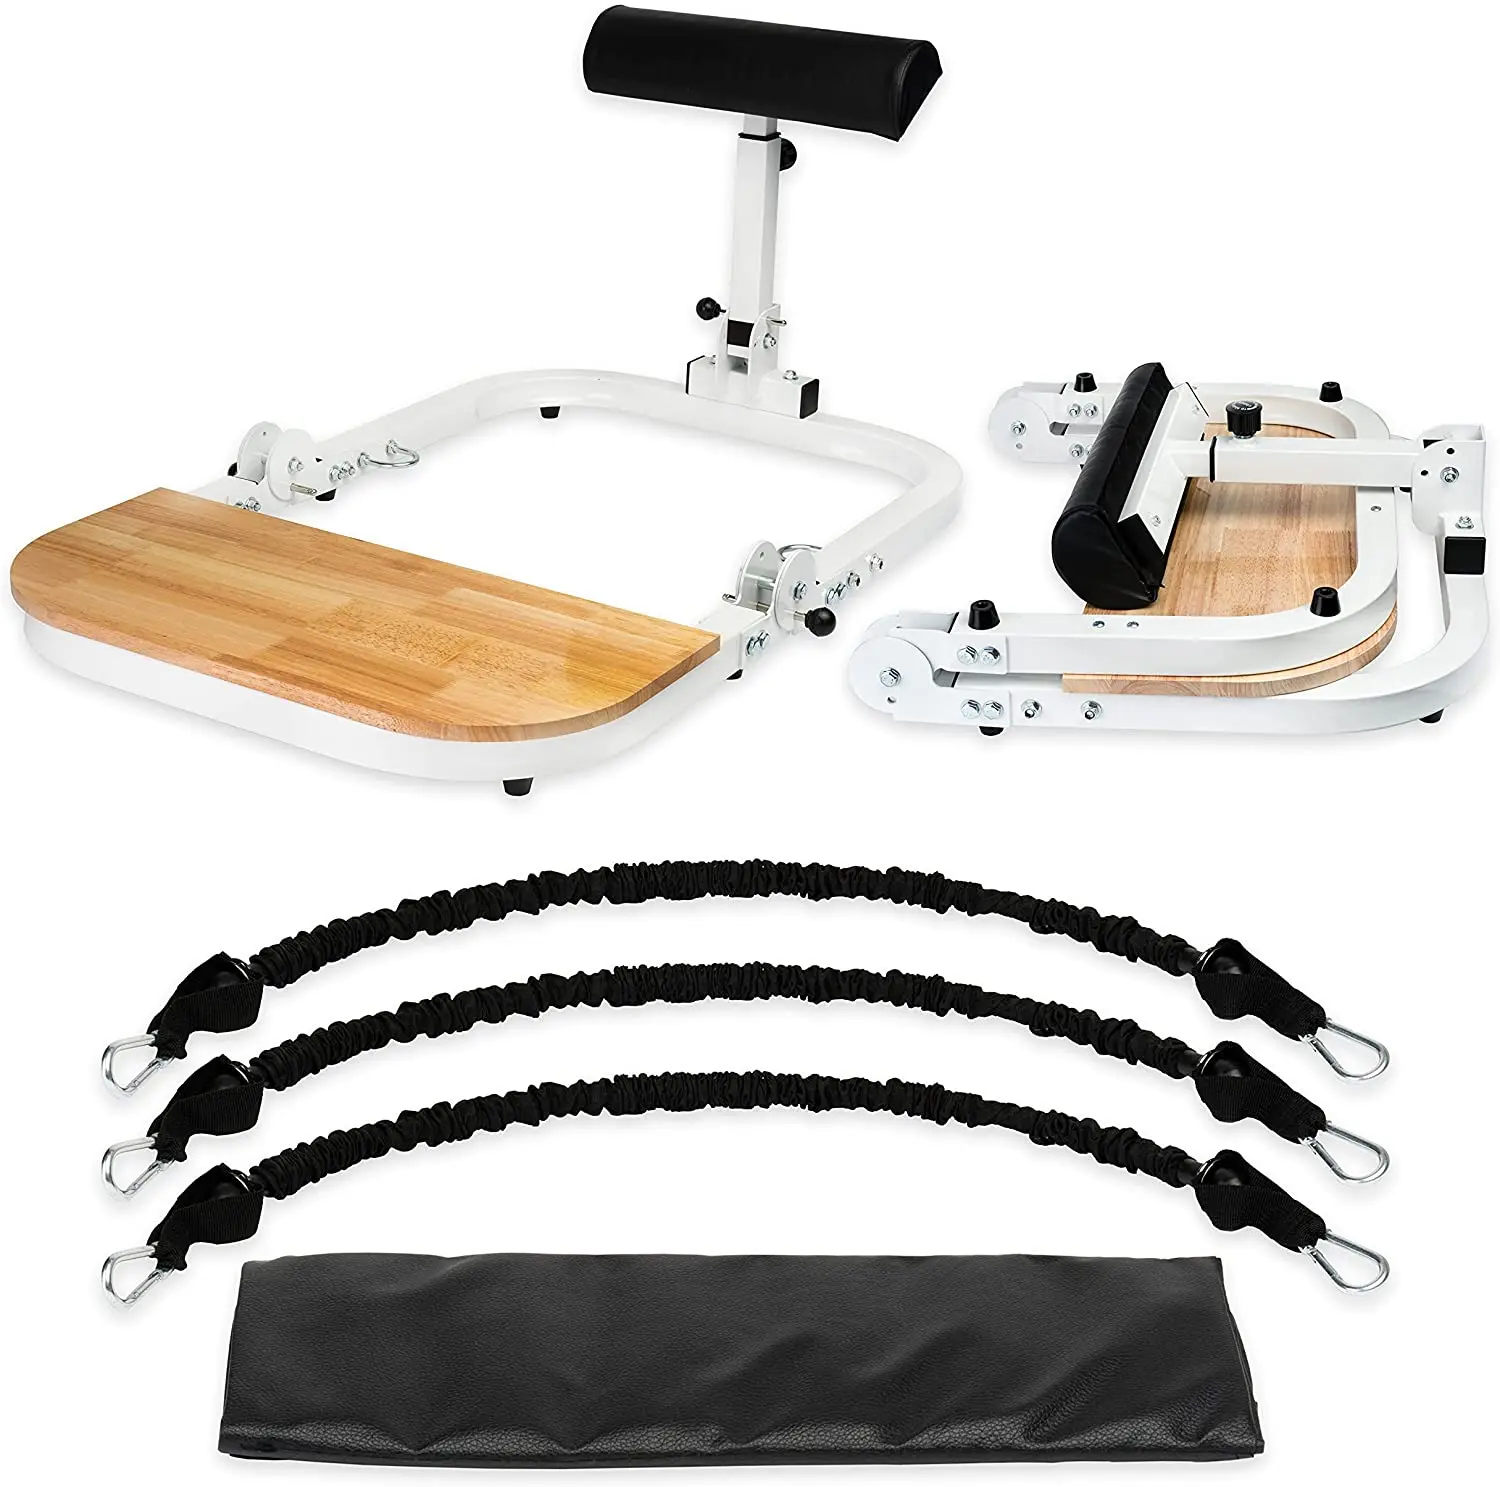 

2021 New Design Hip up Machine Exercises Butt Supplement Foam Thruster Bench Beauty Lift Massage Stack Thrust Gym Equipment, Black and white